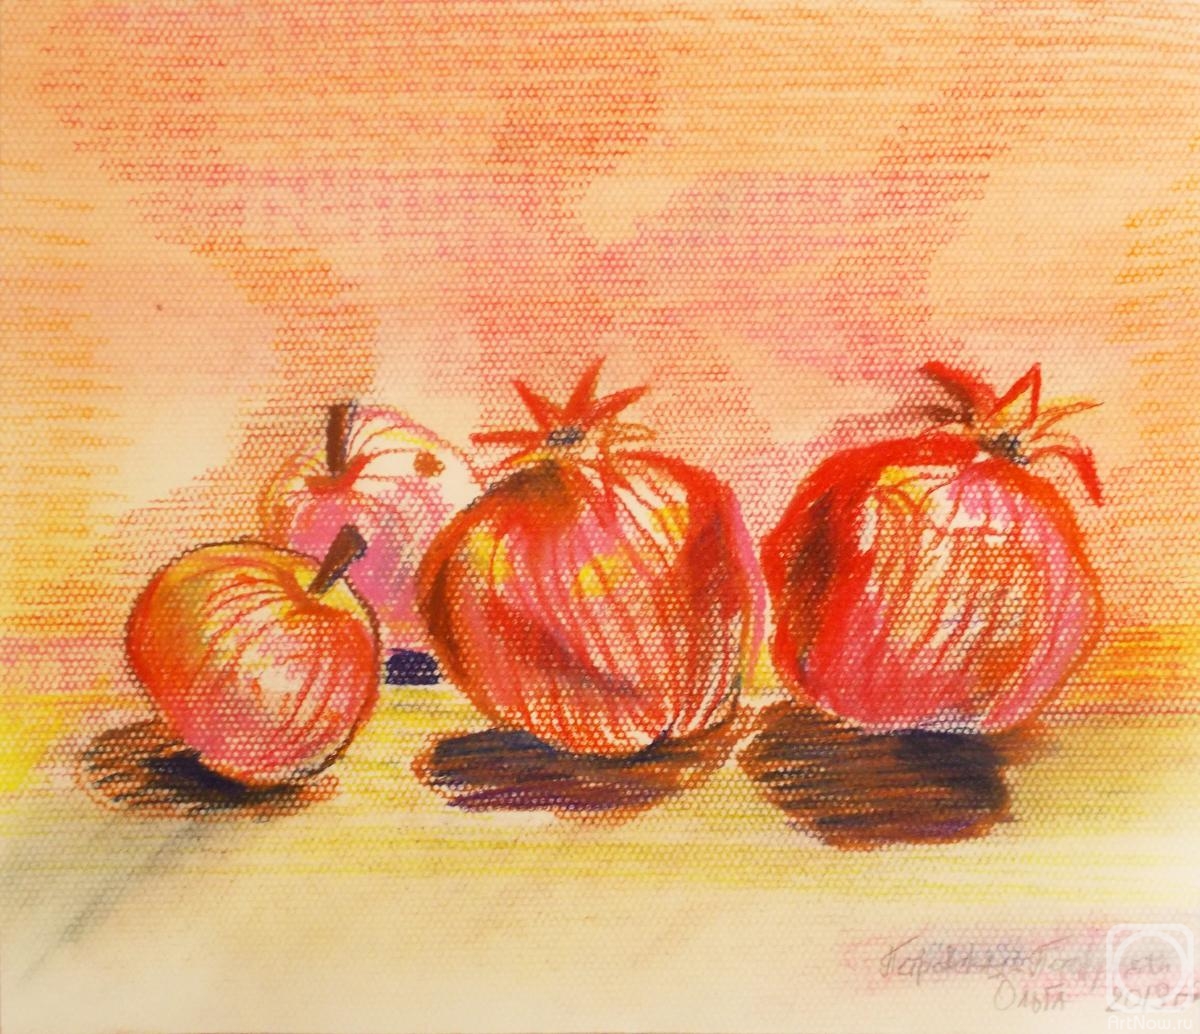 Petrovskaya-Petovraji Olga. Pomegranates and apples